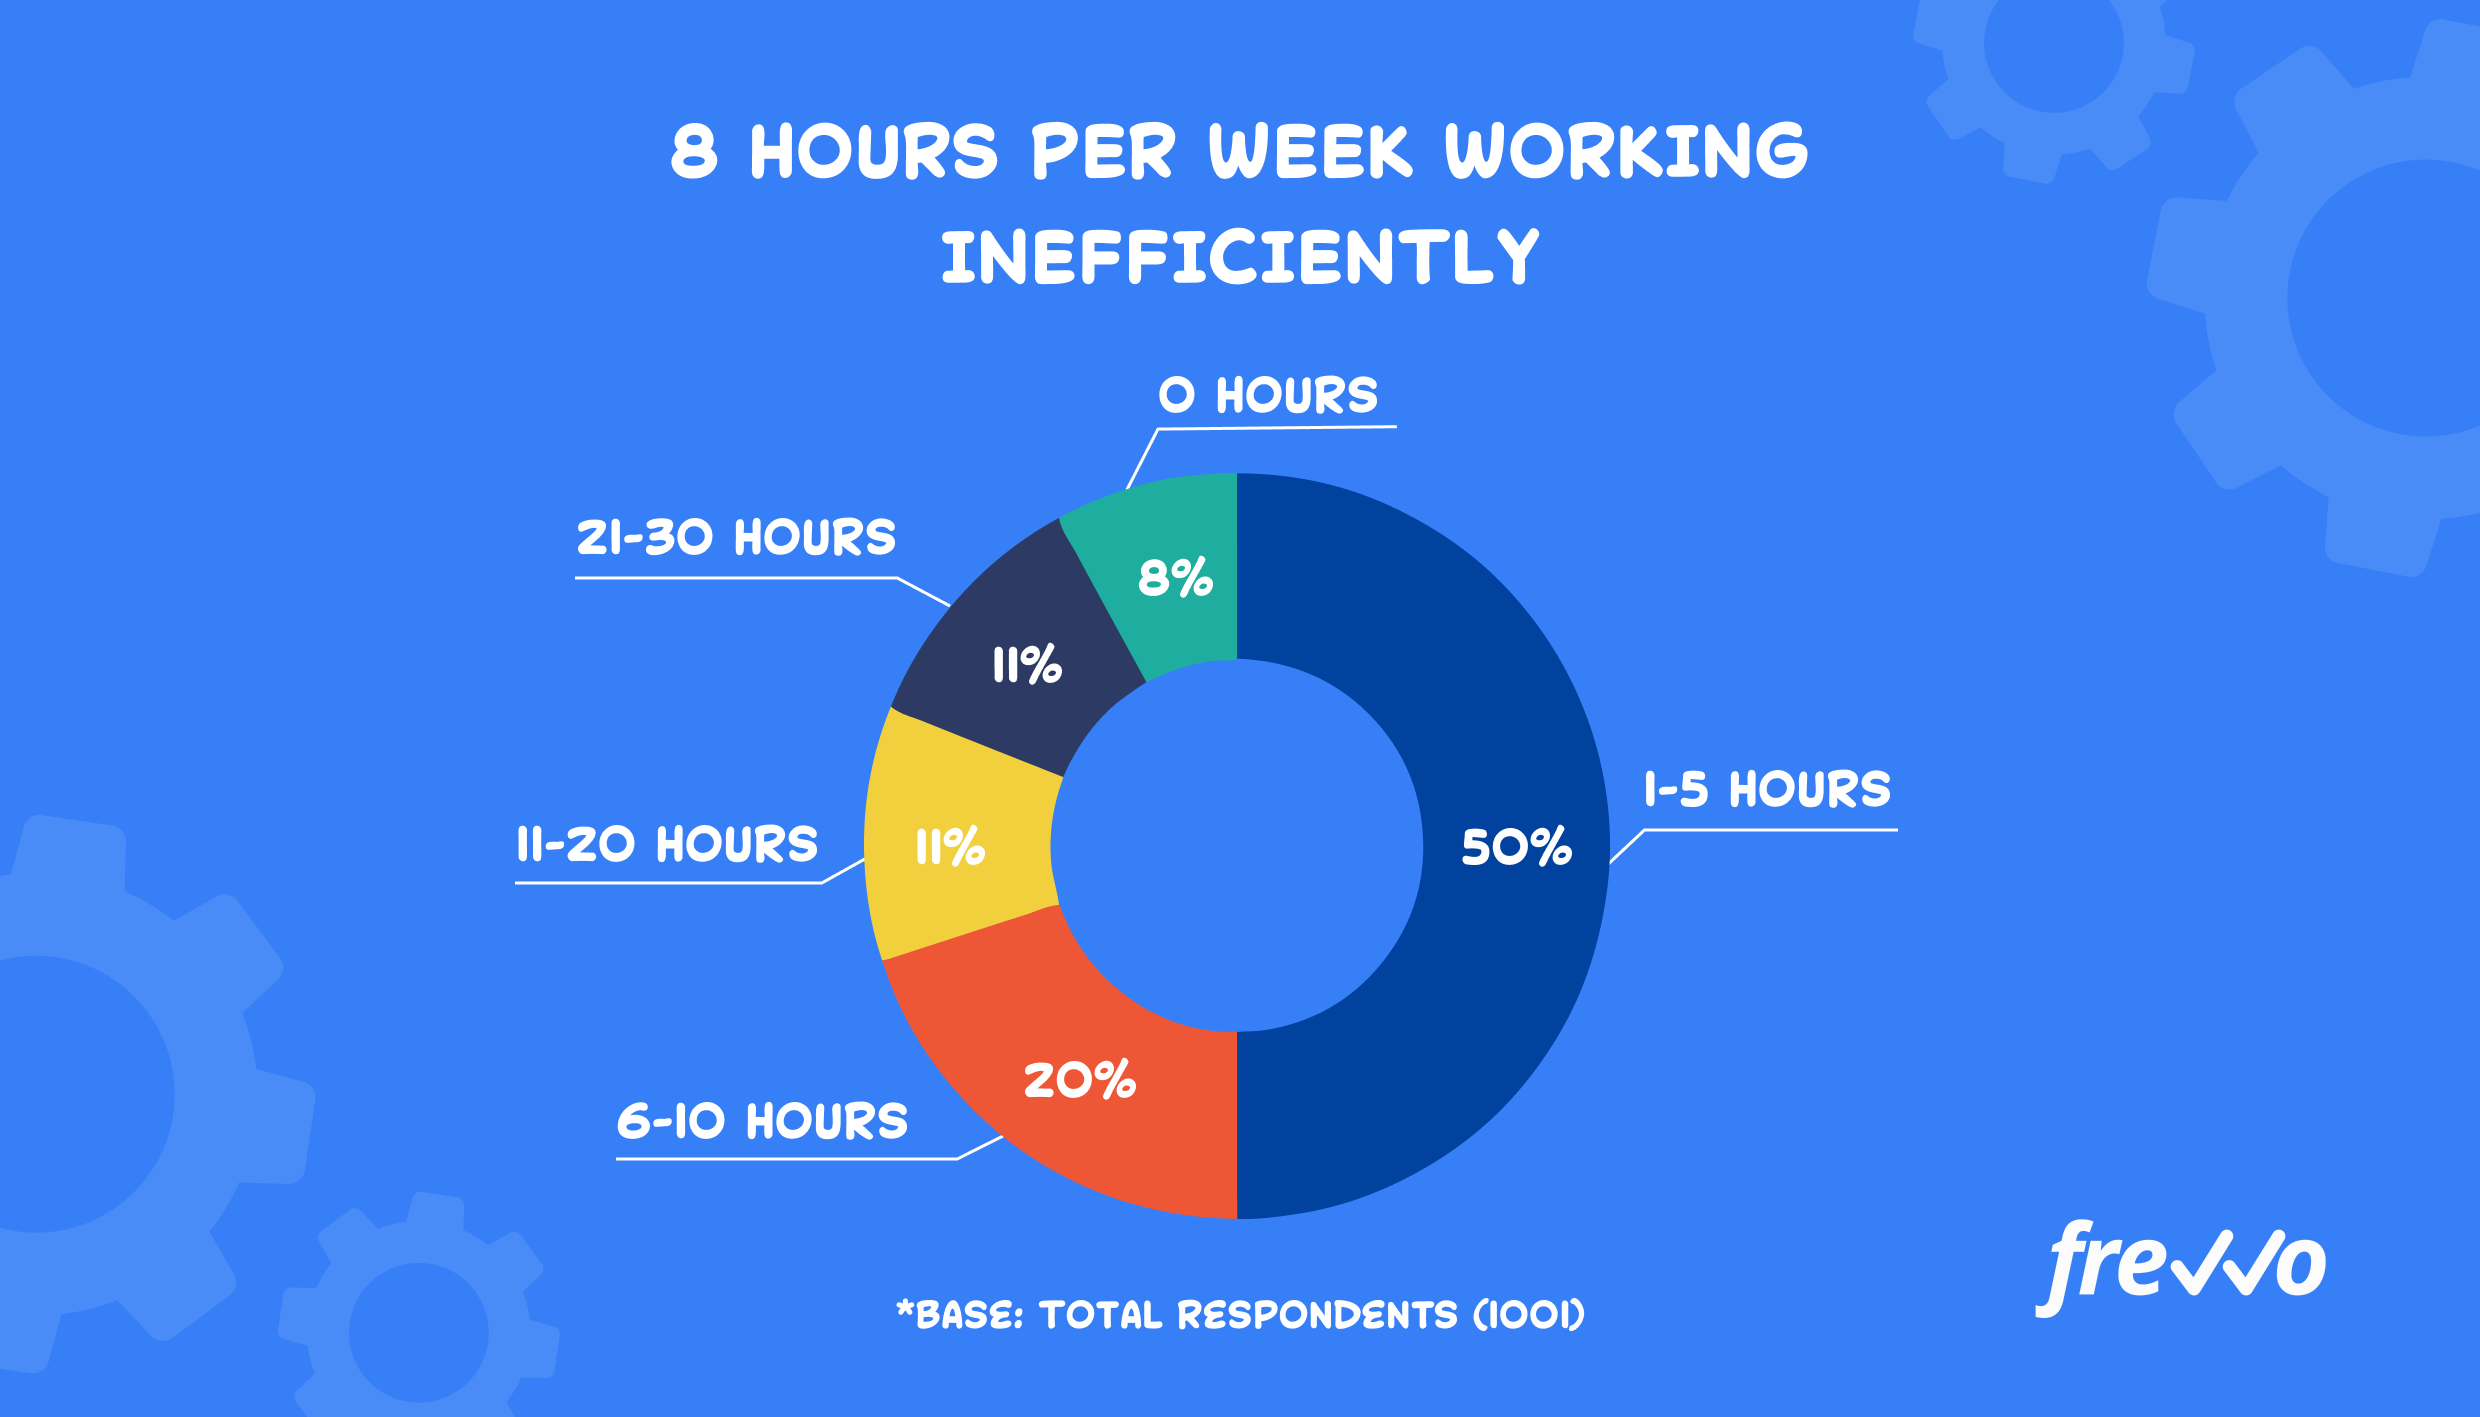 Employees spend 8 hours per week working efficiently